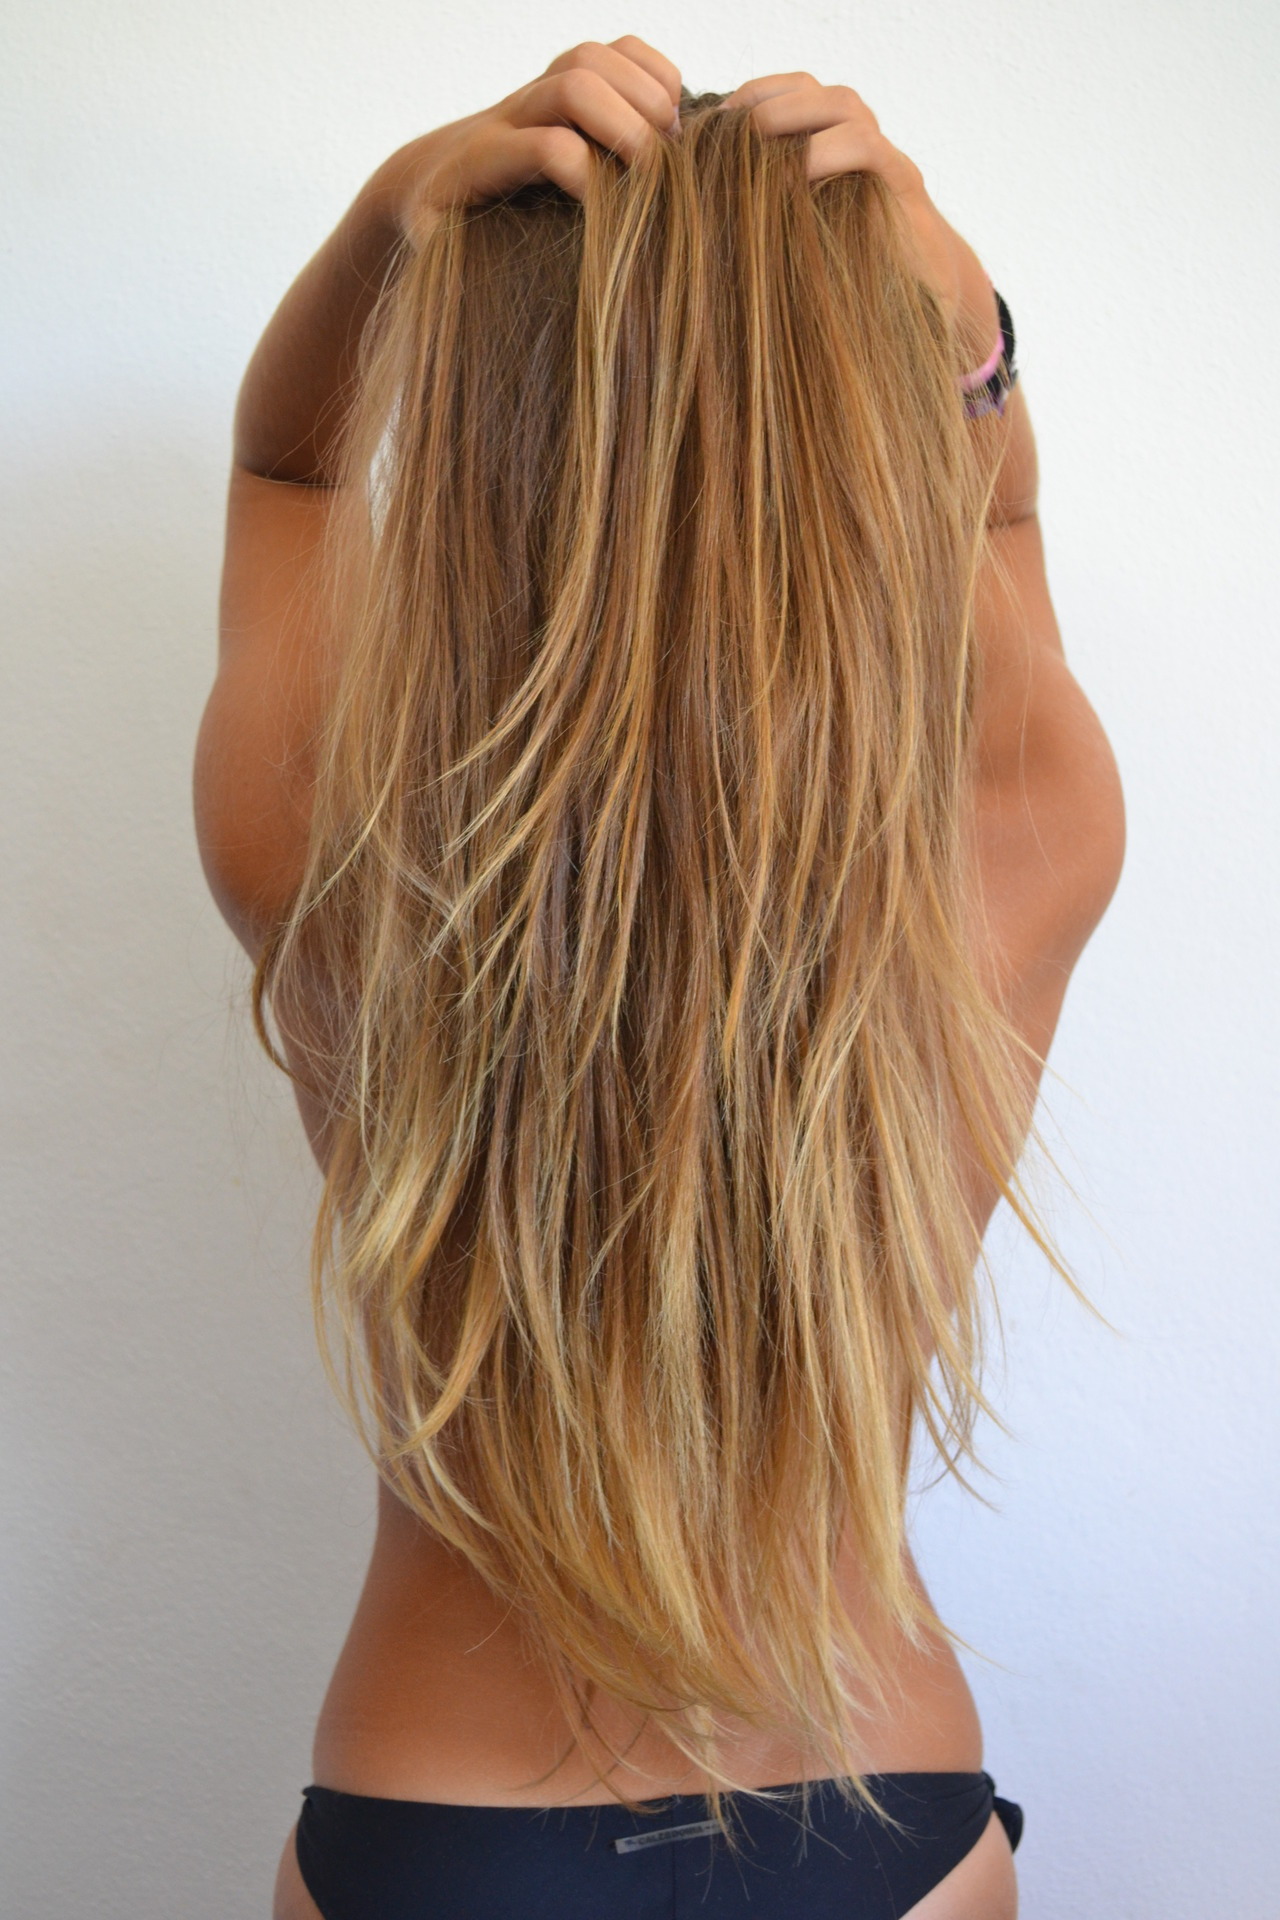 Long layered blonde hair